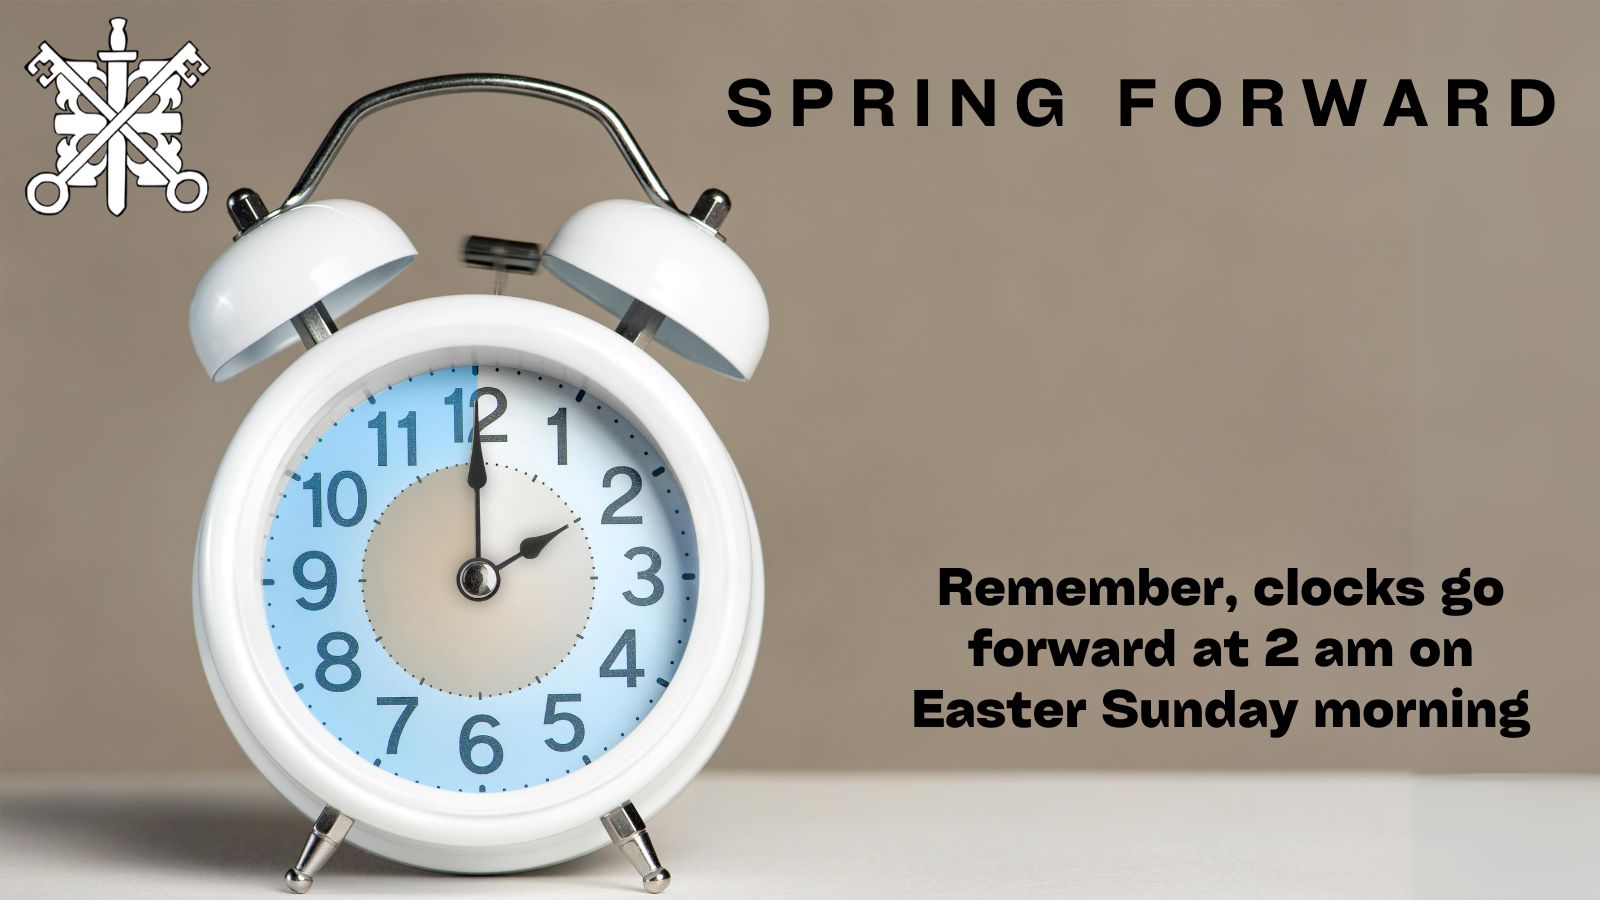 Remember, clocks go forward this Sunday morning at 2 am